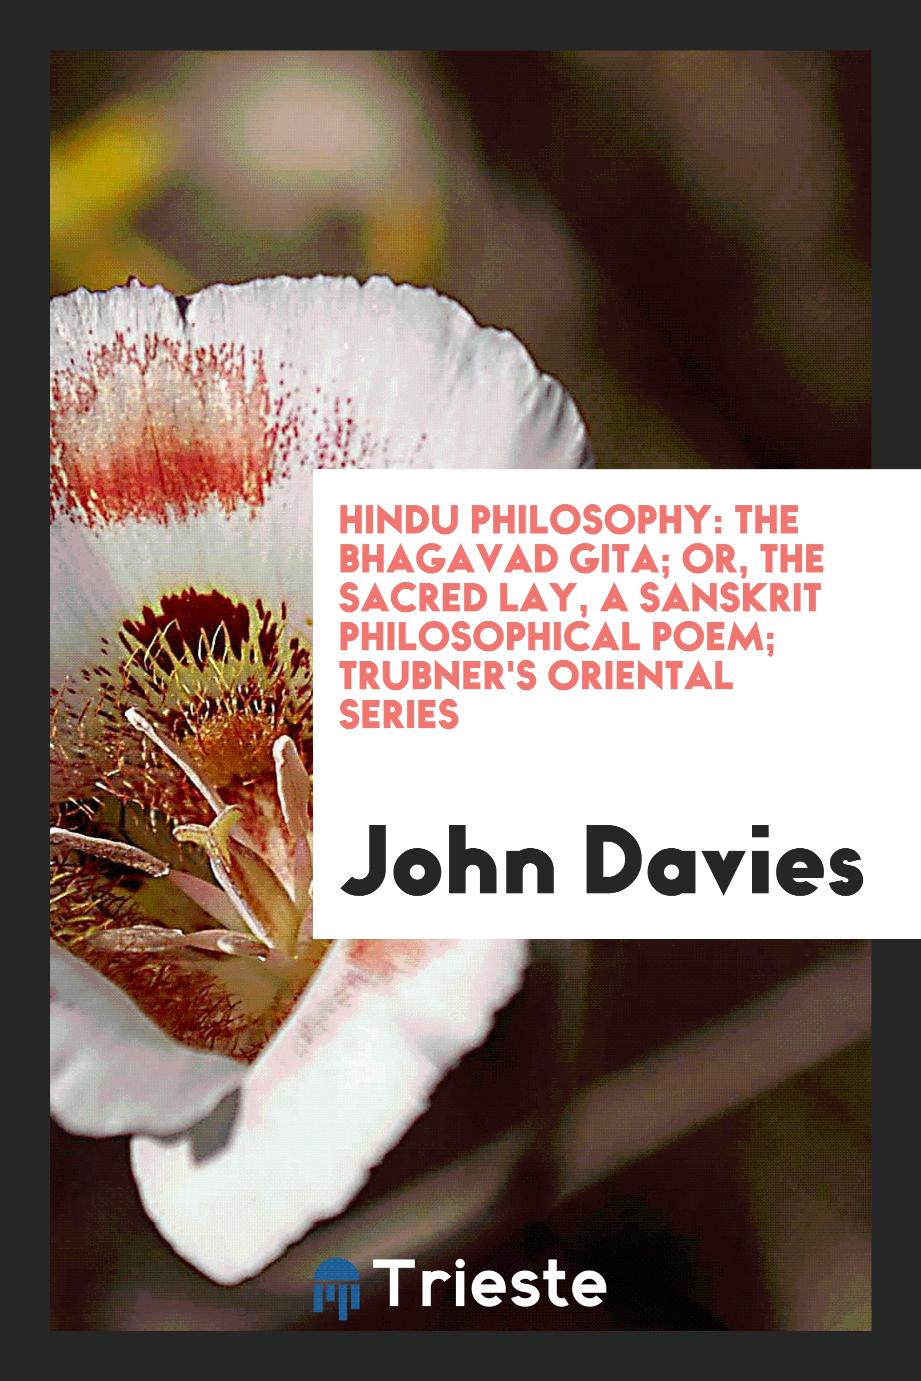 Hindu philosophy: The Bhagavad Gita; or, The Sacred Lay, a Sanskrit philosophical poem; Trubner's Oriental series